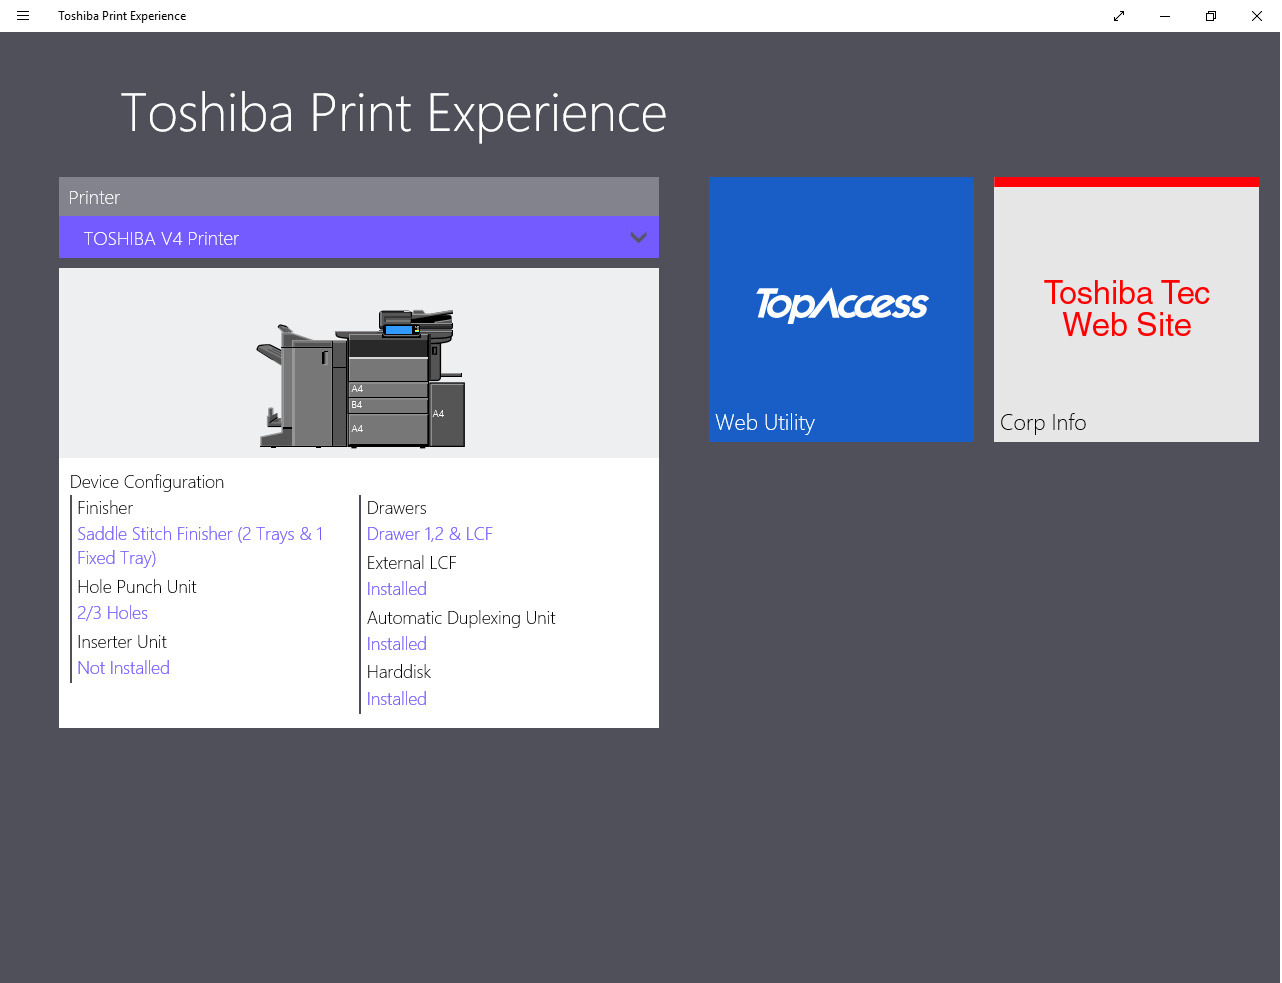 Toshiba Print Experience